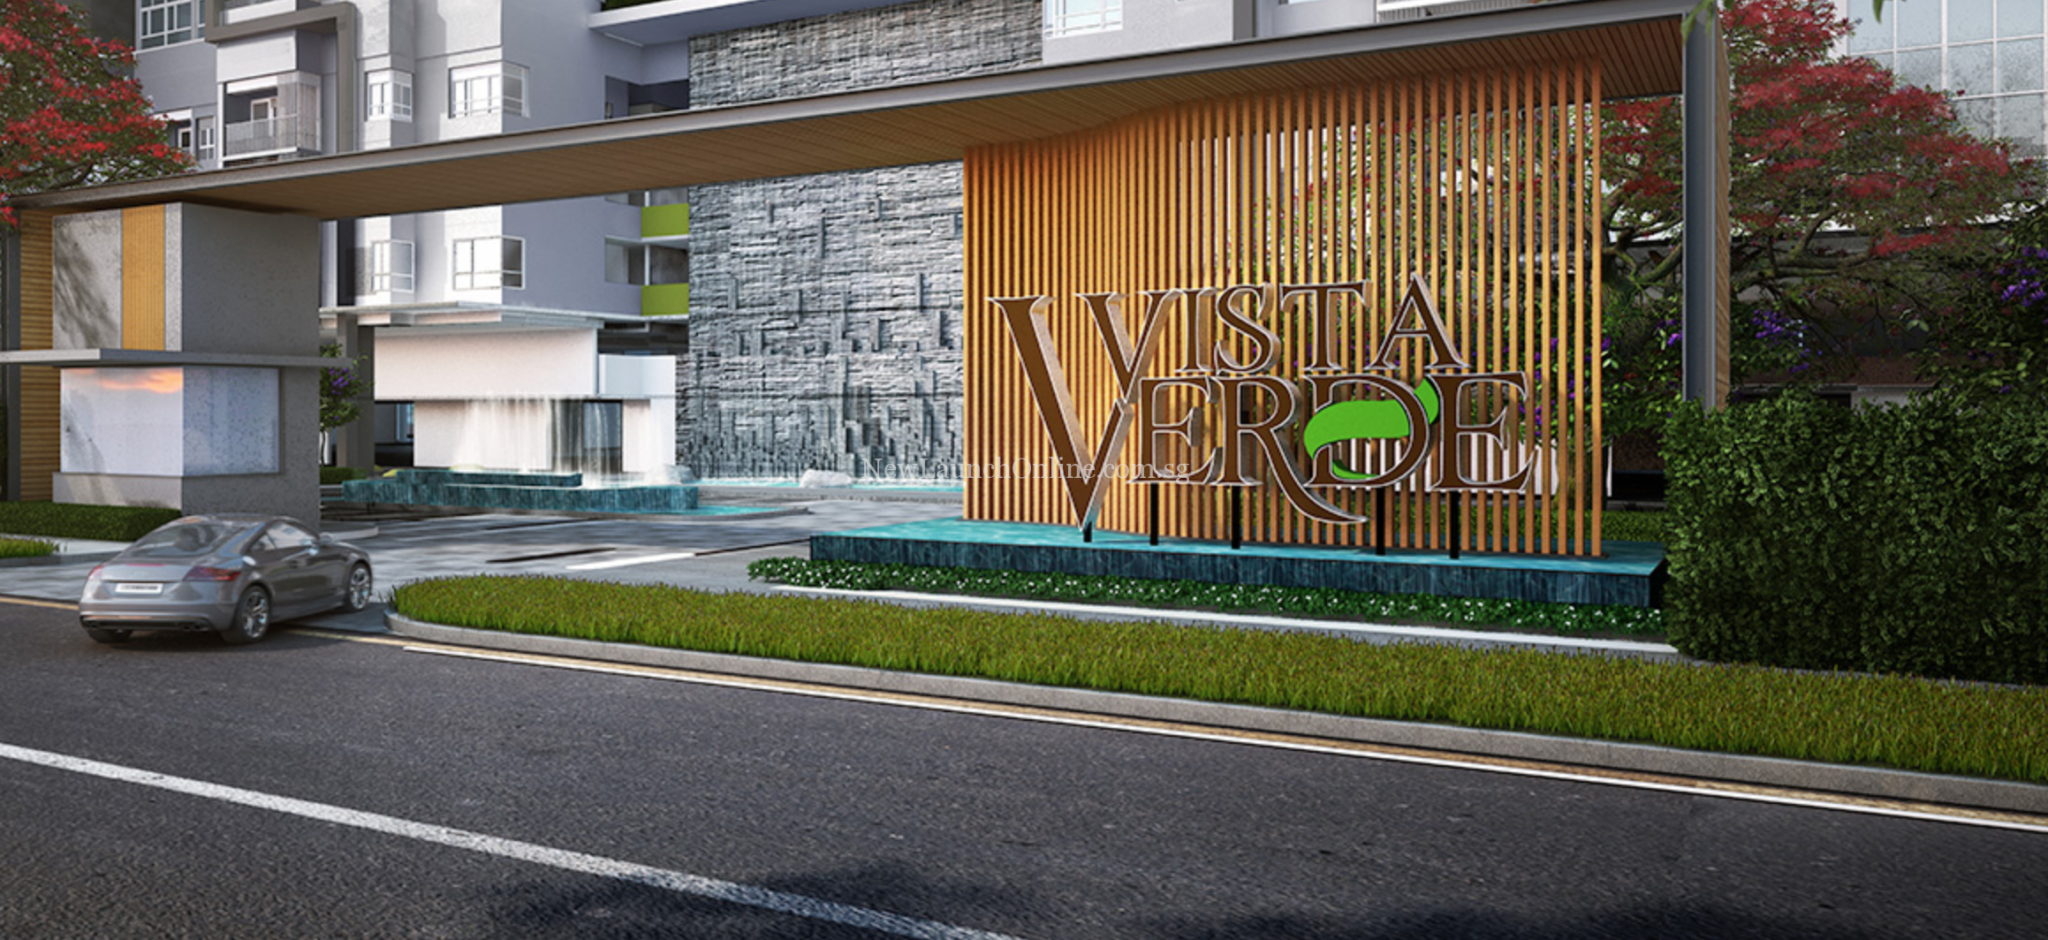 Vista Verde Vietnam Entrance